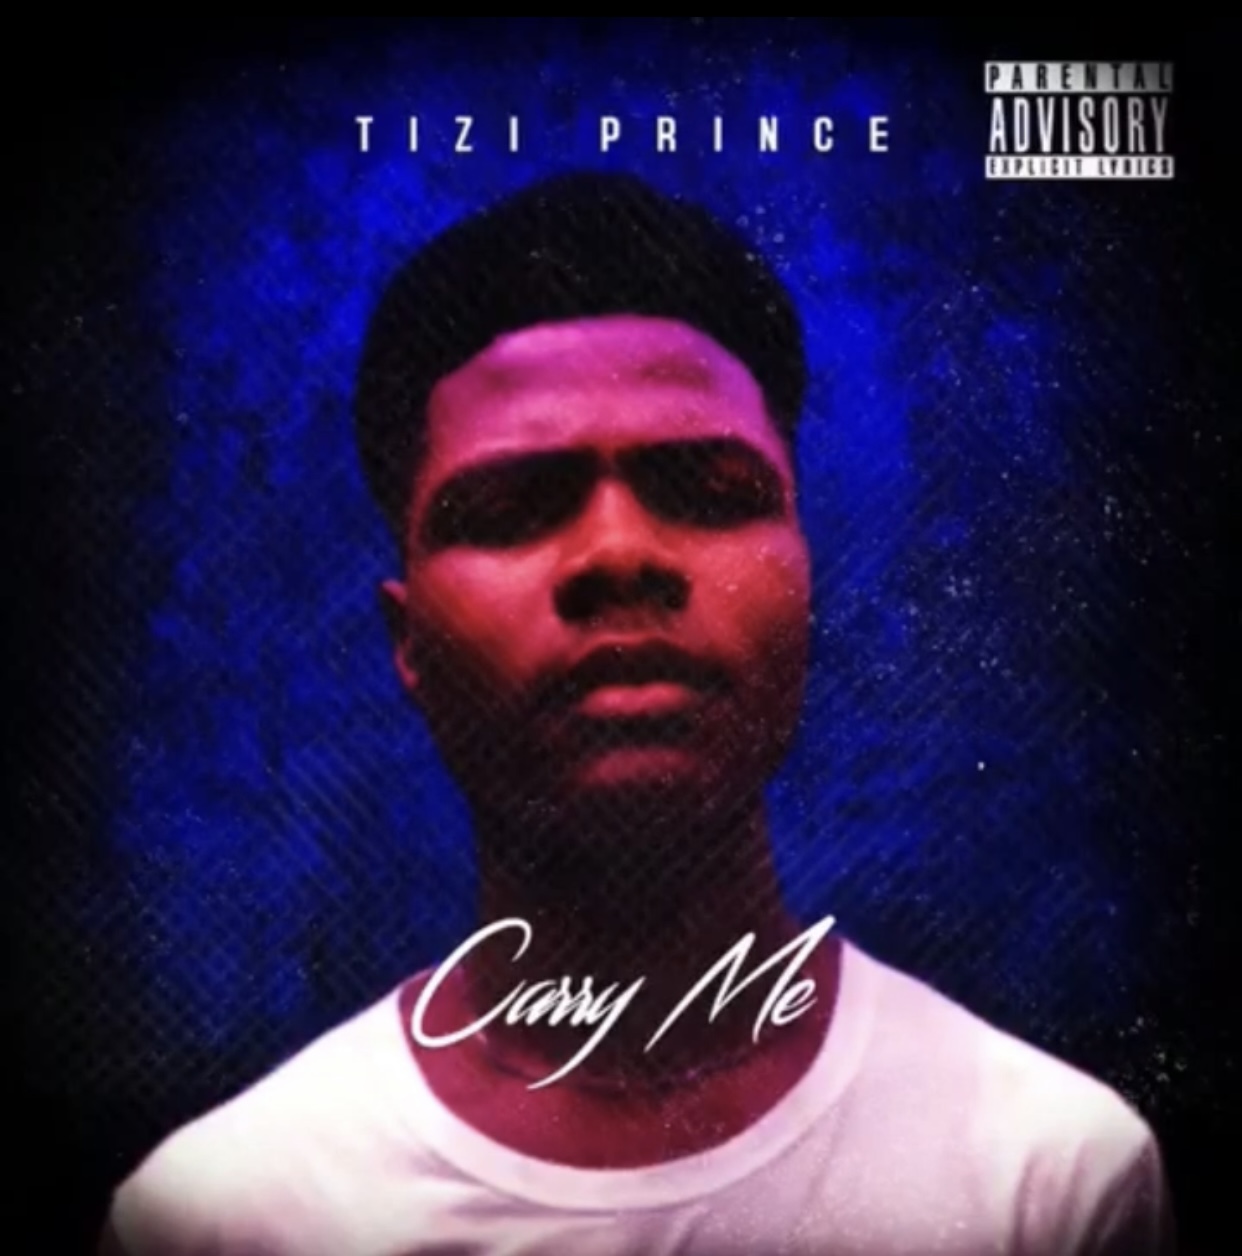 Tizi prince - carry me cover art